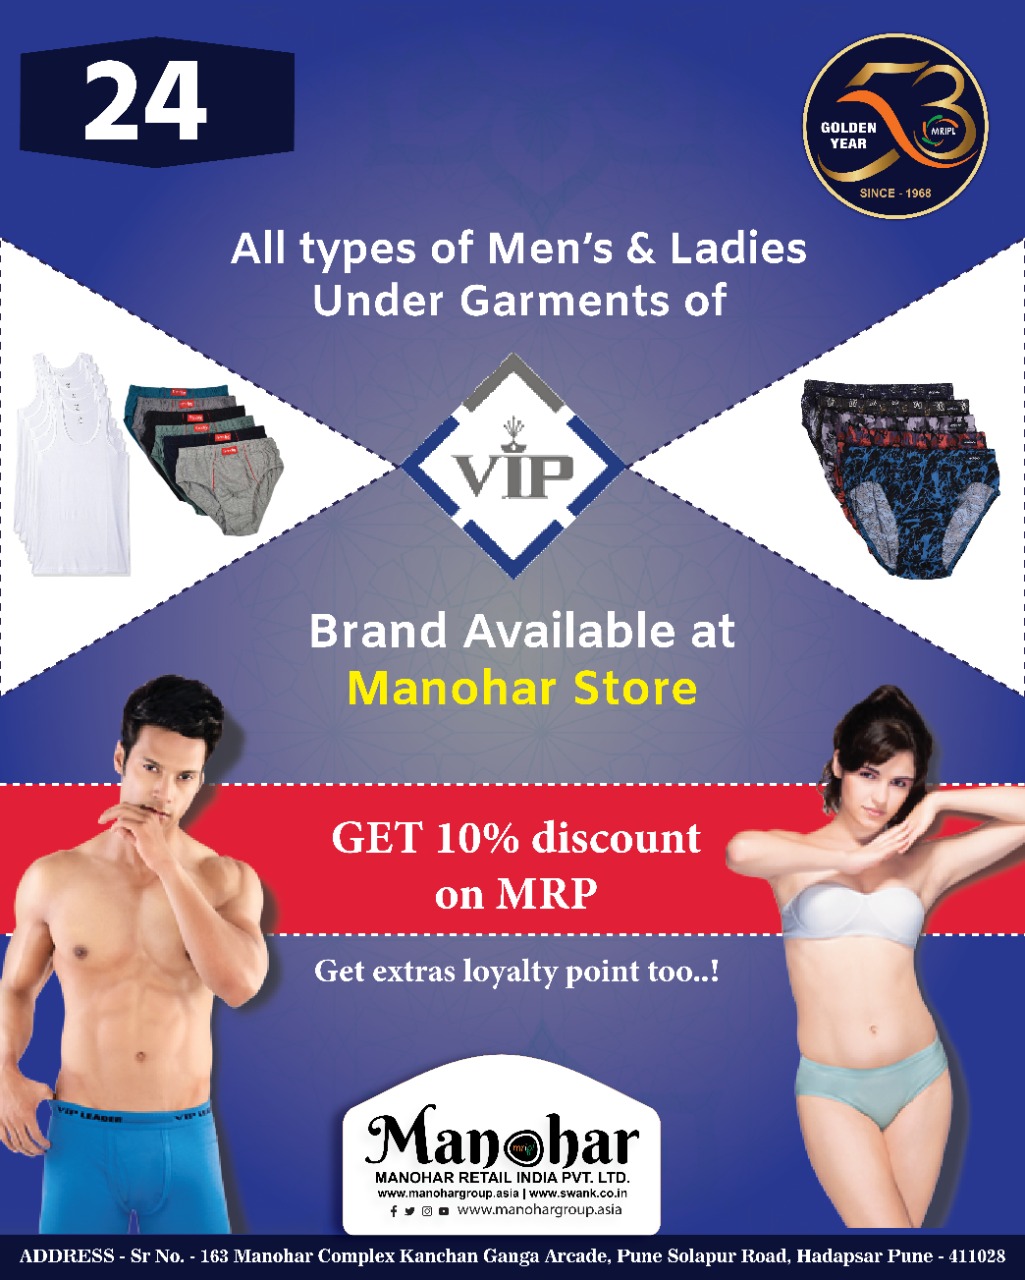 Manohar Retail India on X: All types of Men's & Ladies